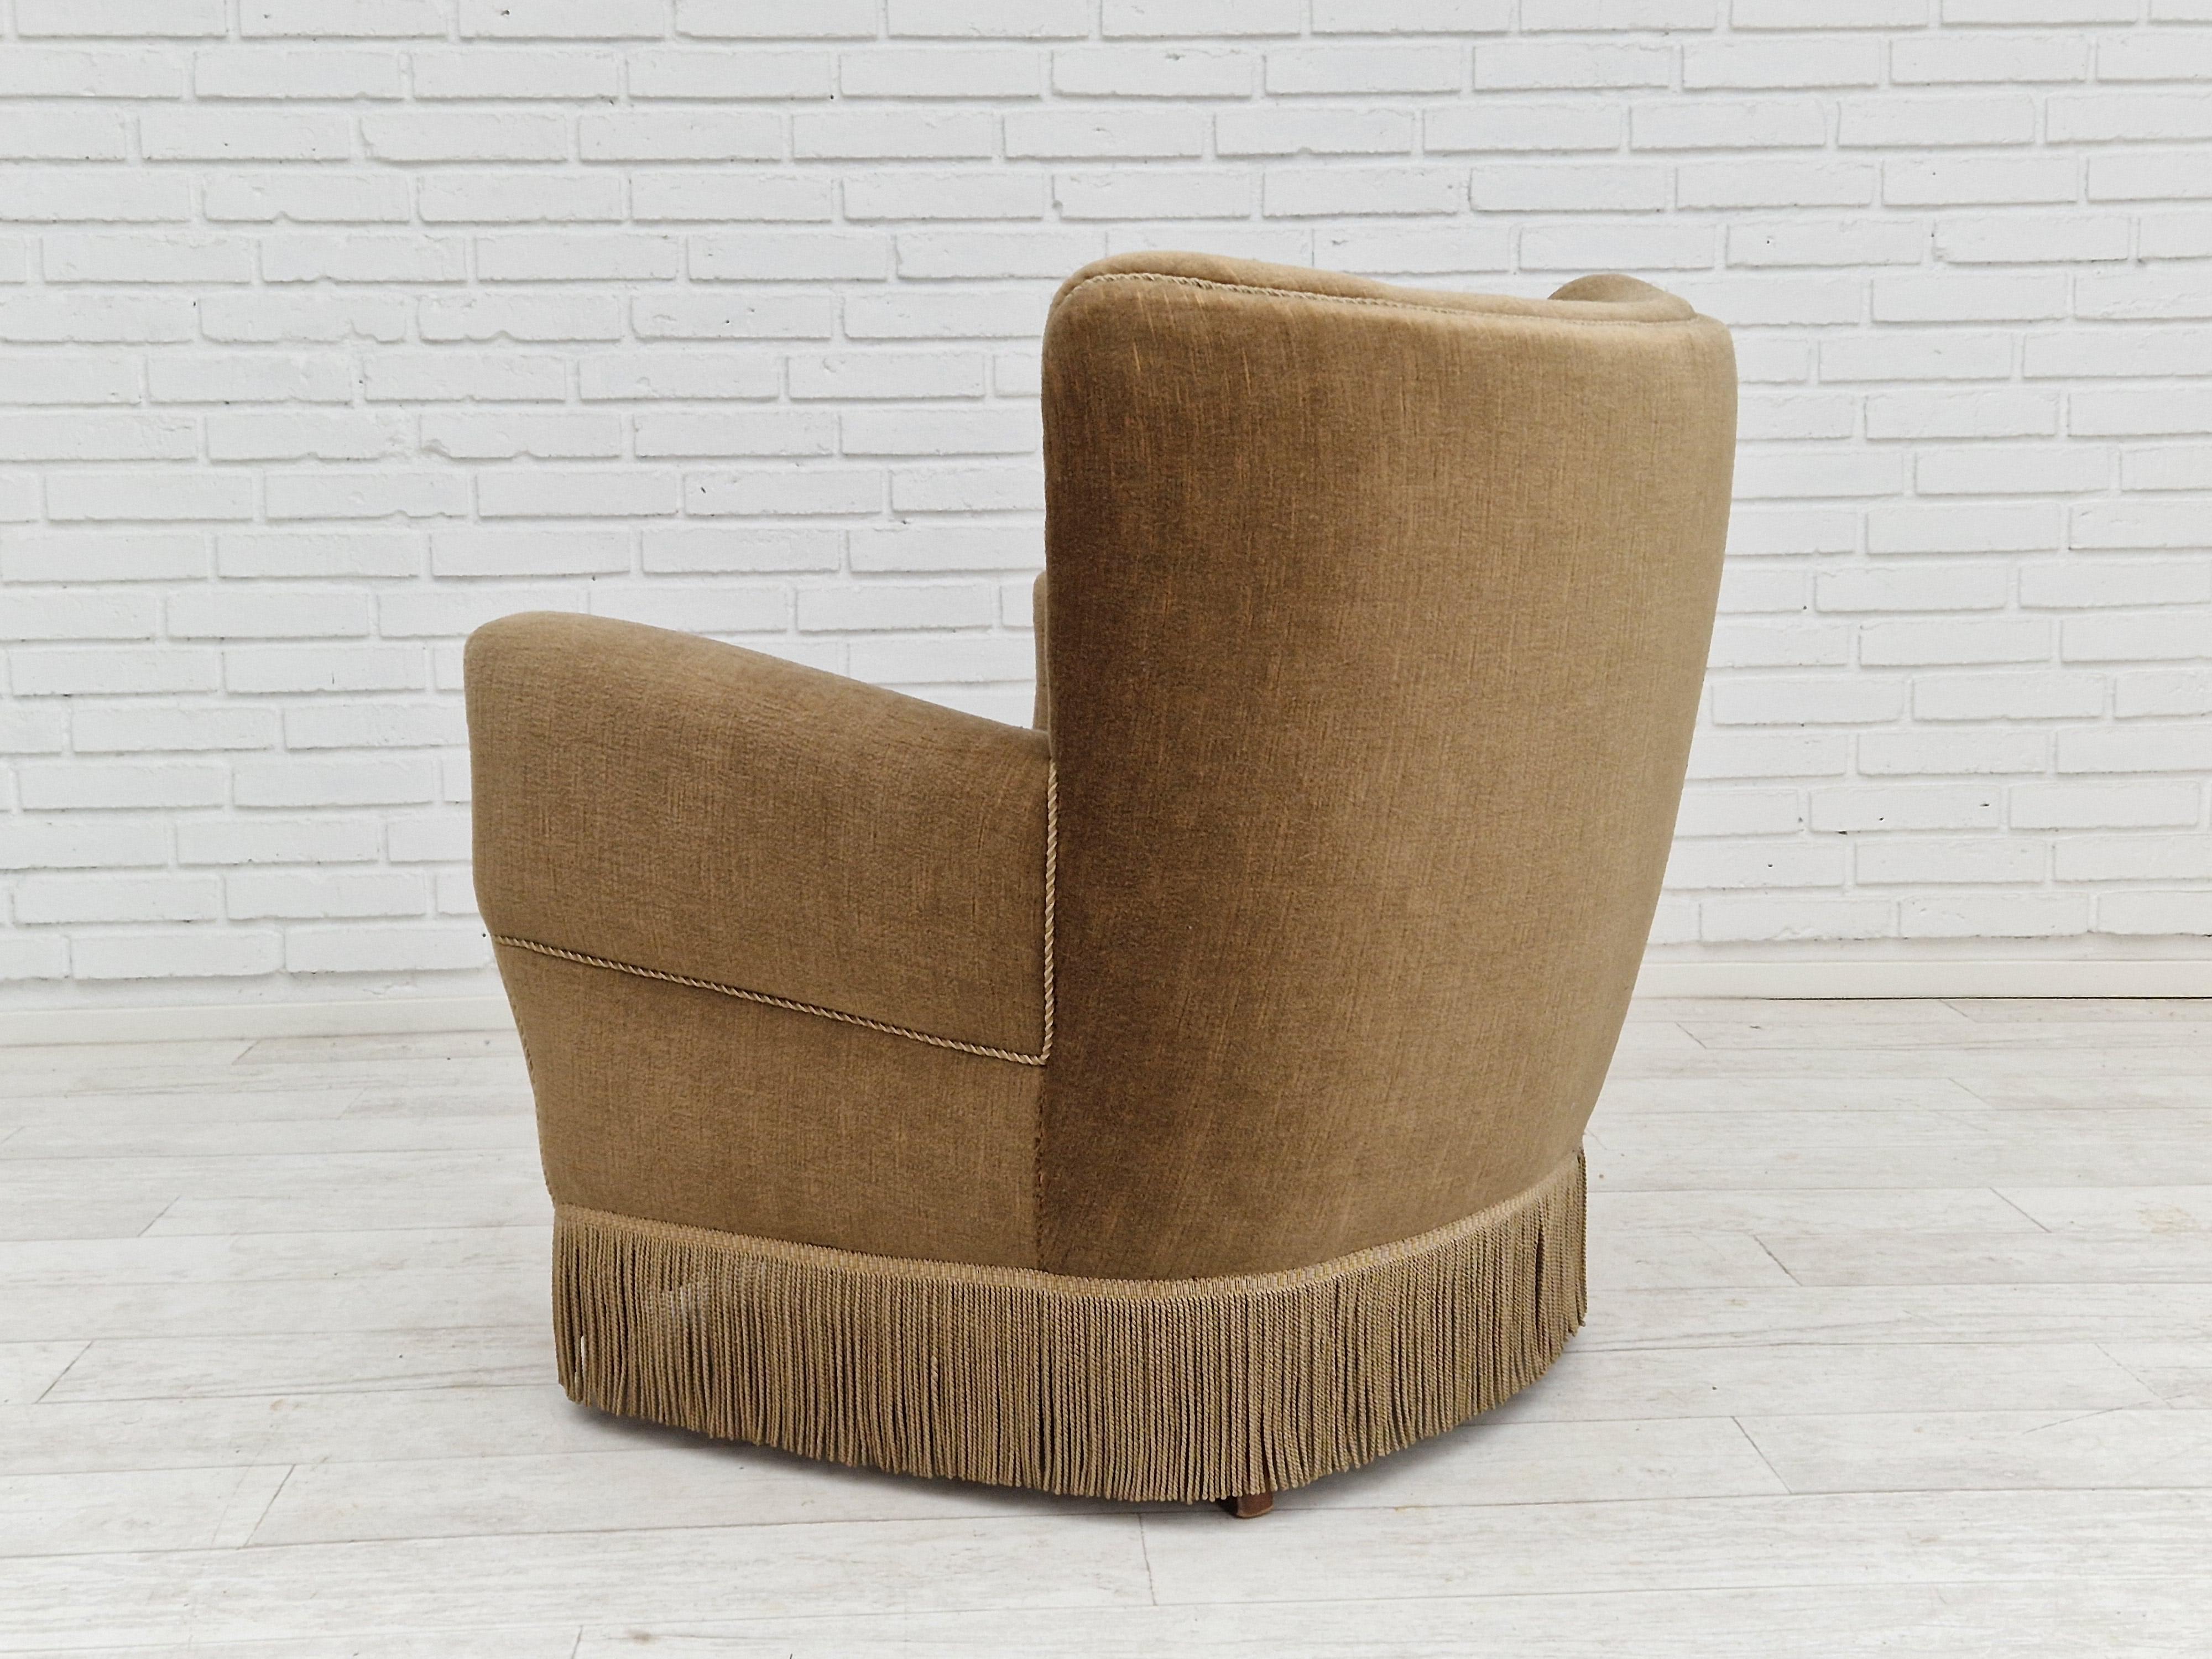 1970s, Danish velour chair, original condition, beech wood. 2